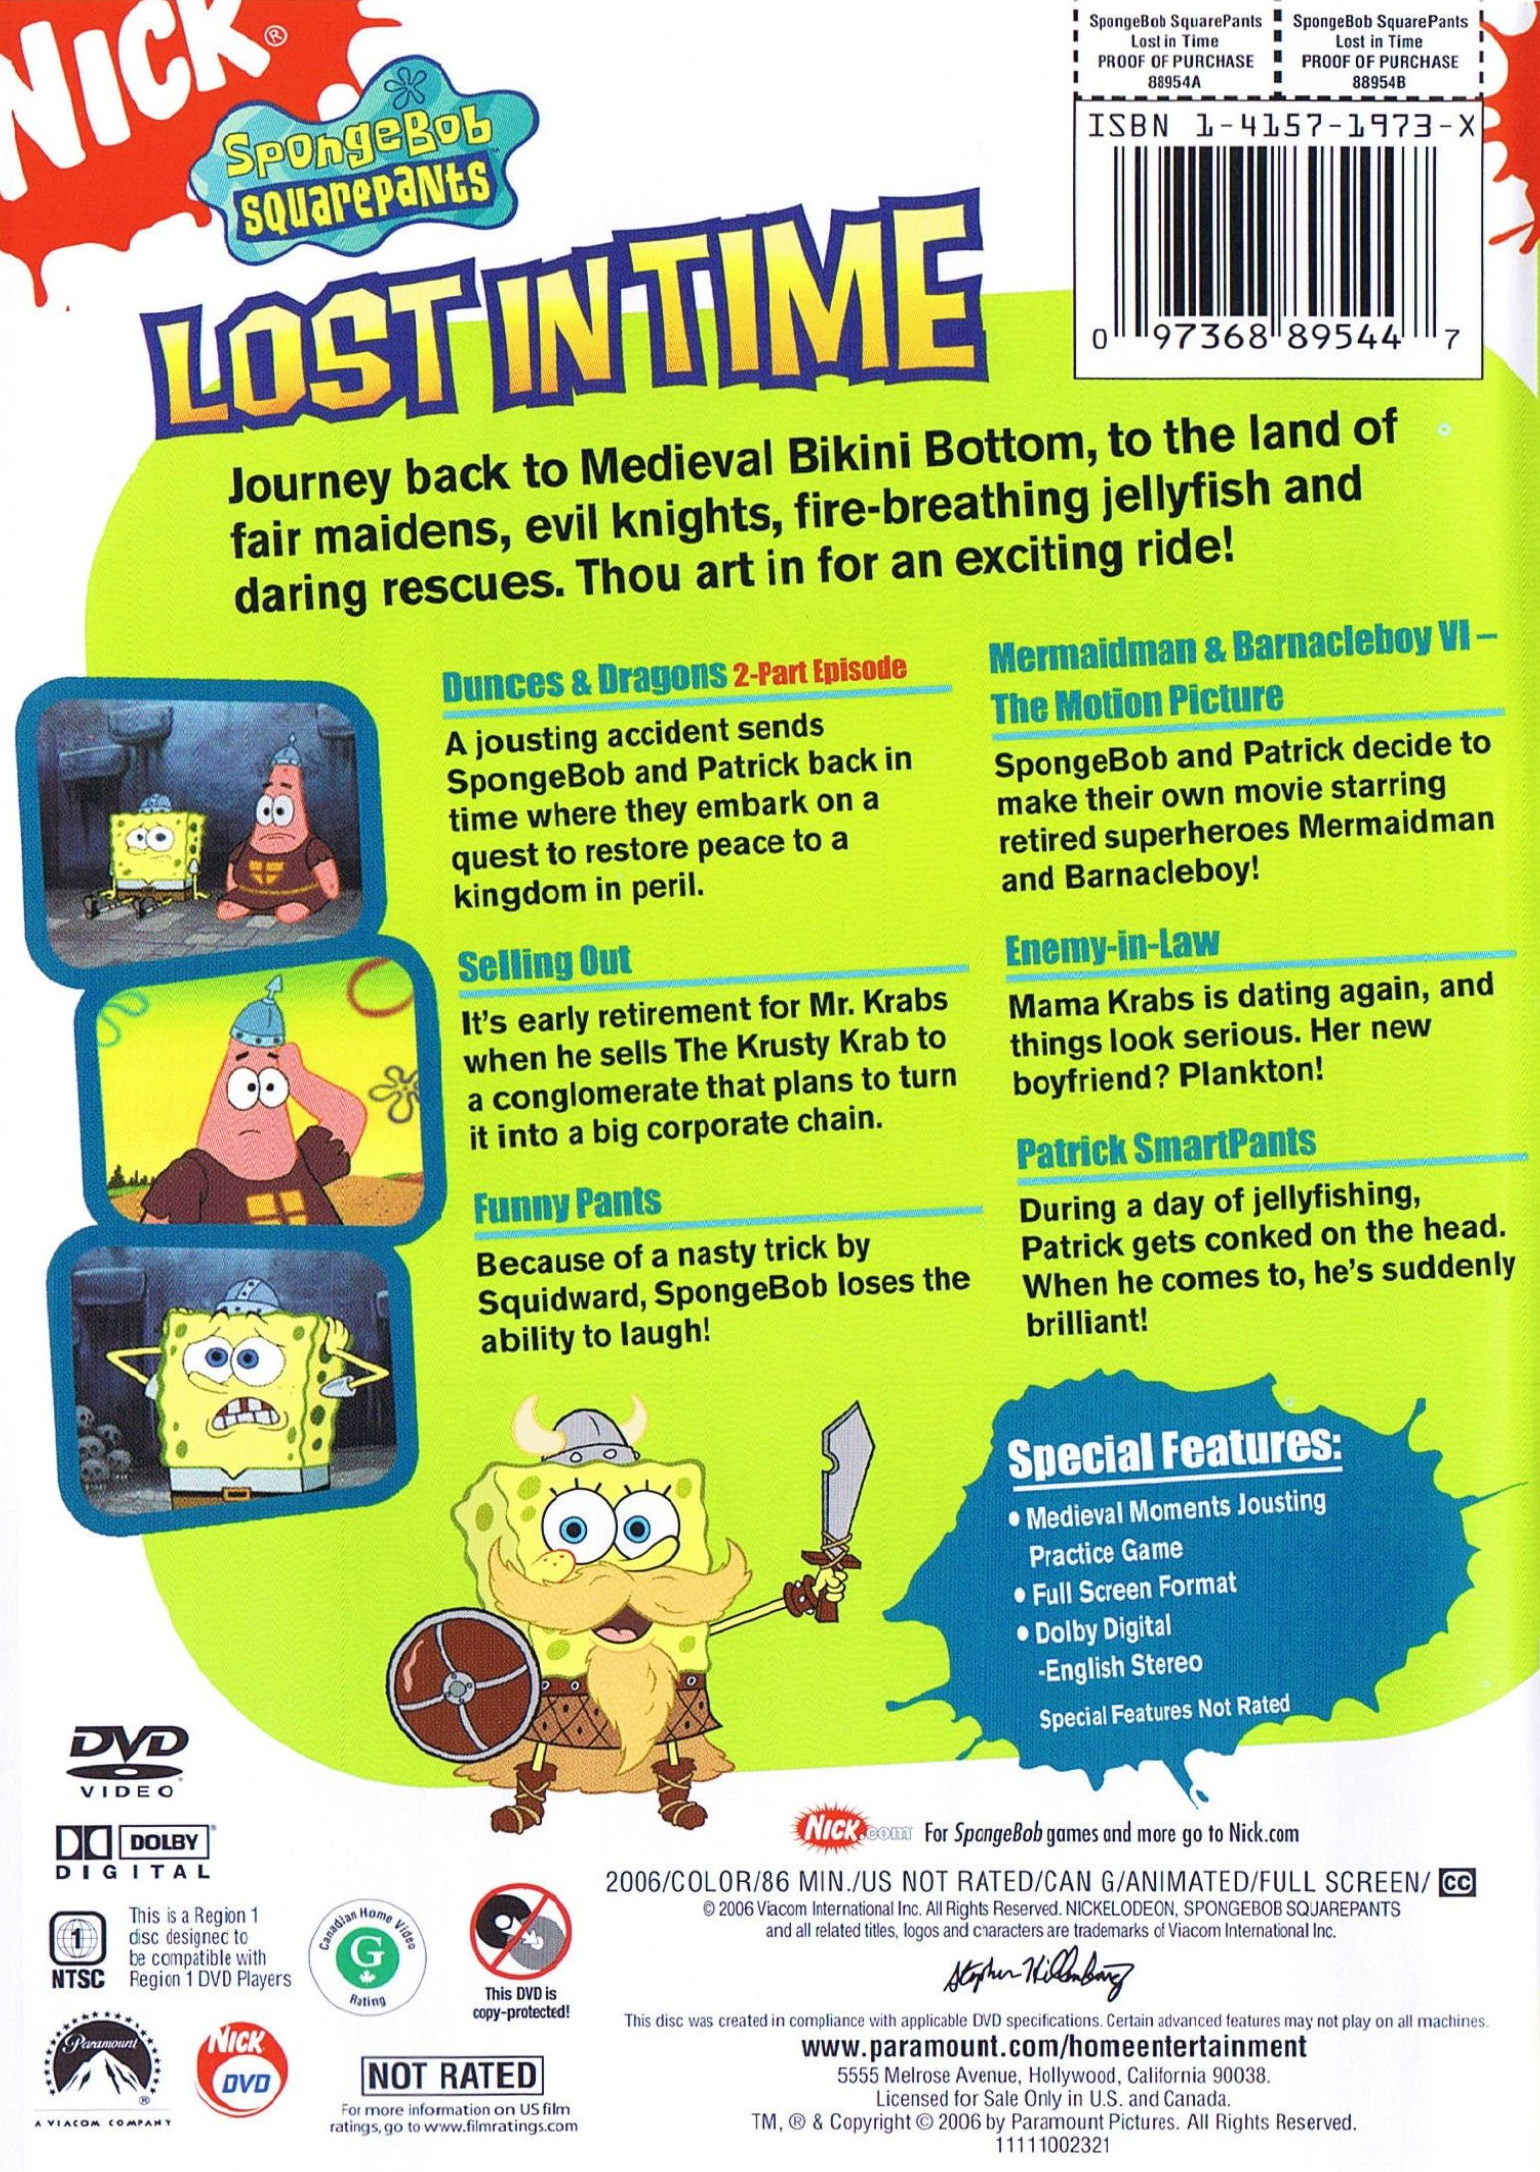 Lost in Time | Encyclopedia SpongeBobia | FANDOM powered by Wikia